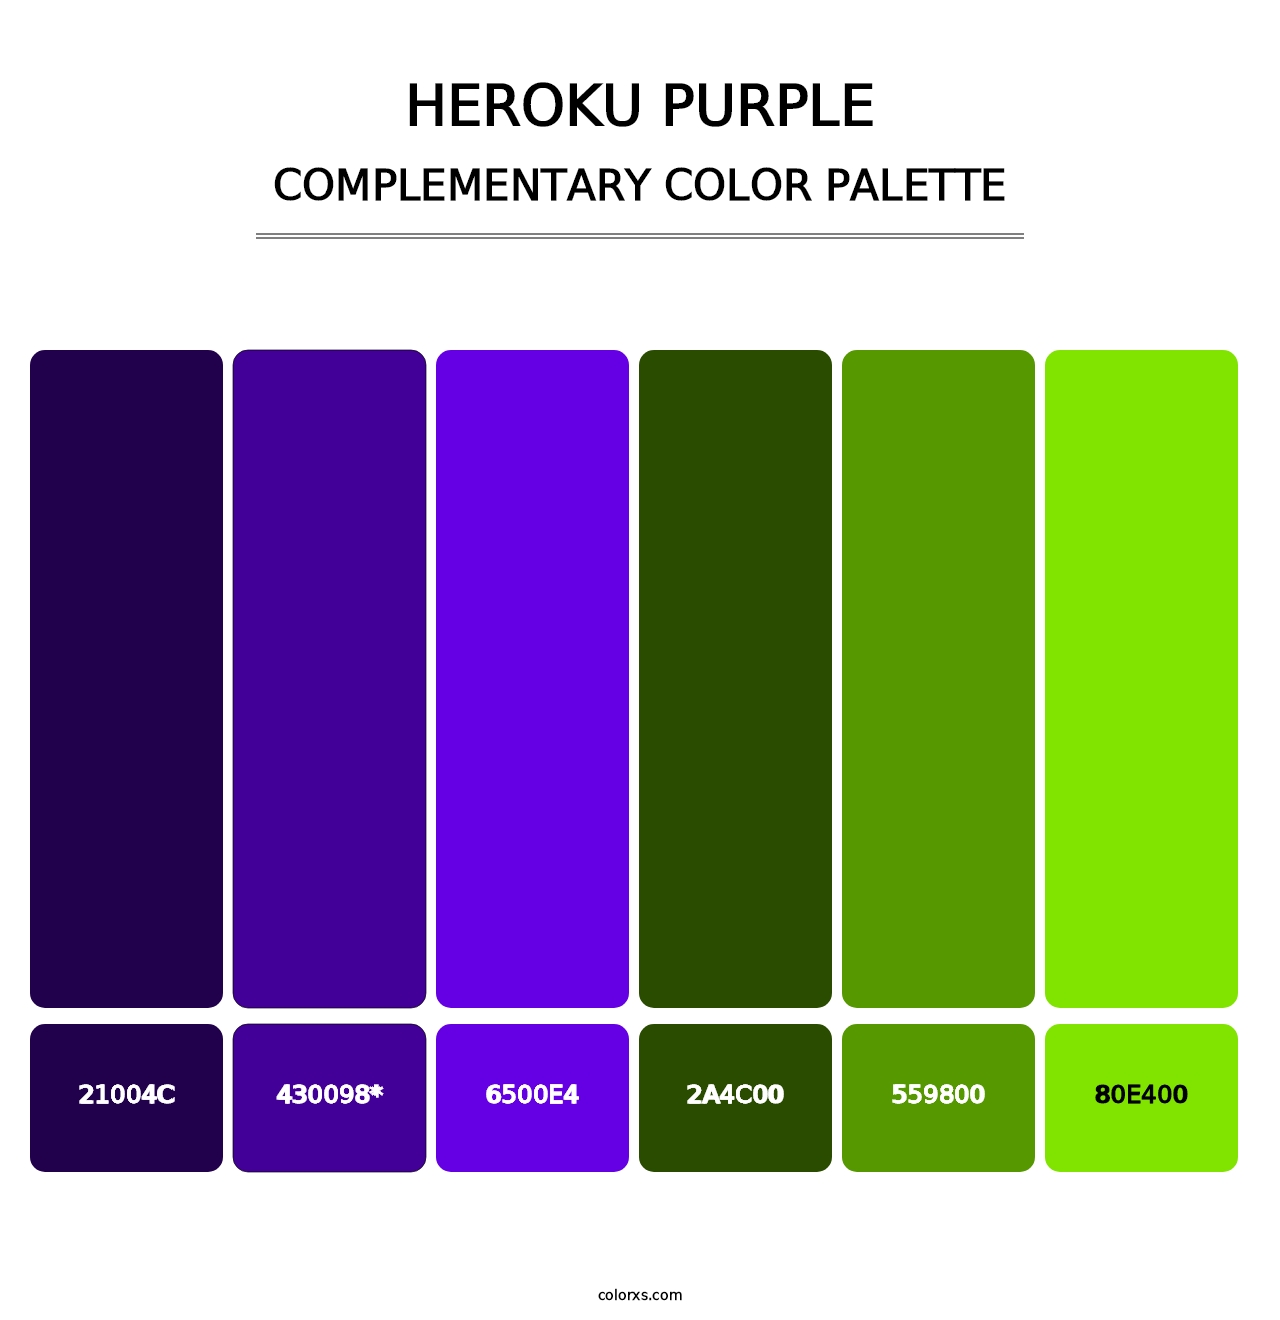 Heroku Purple - Complementary Color Palette